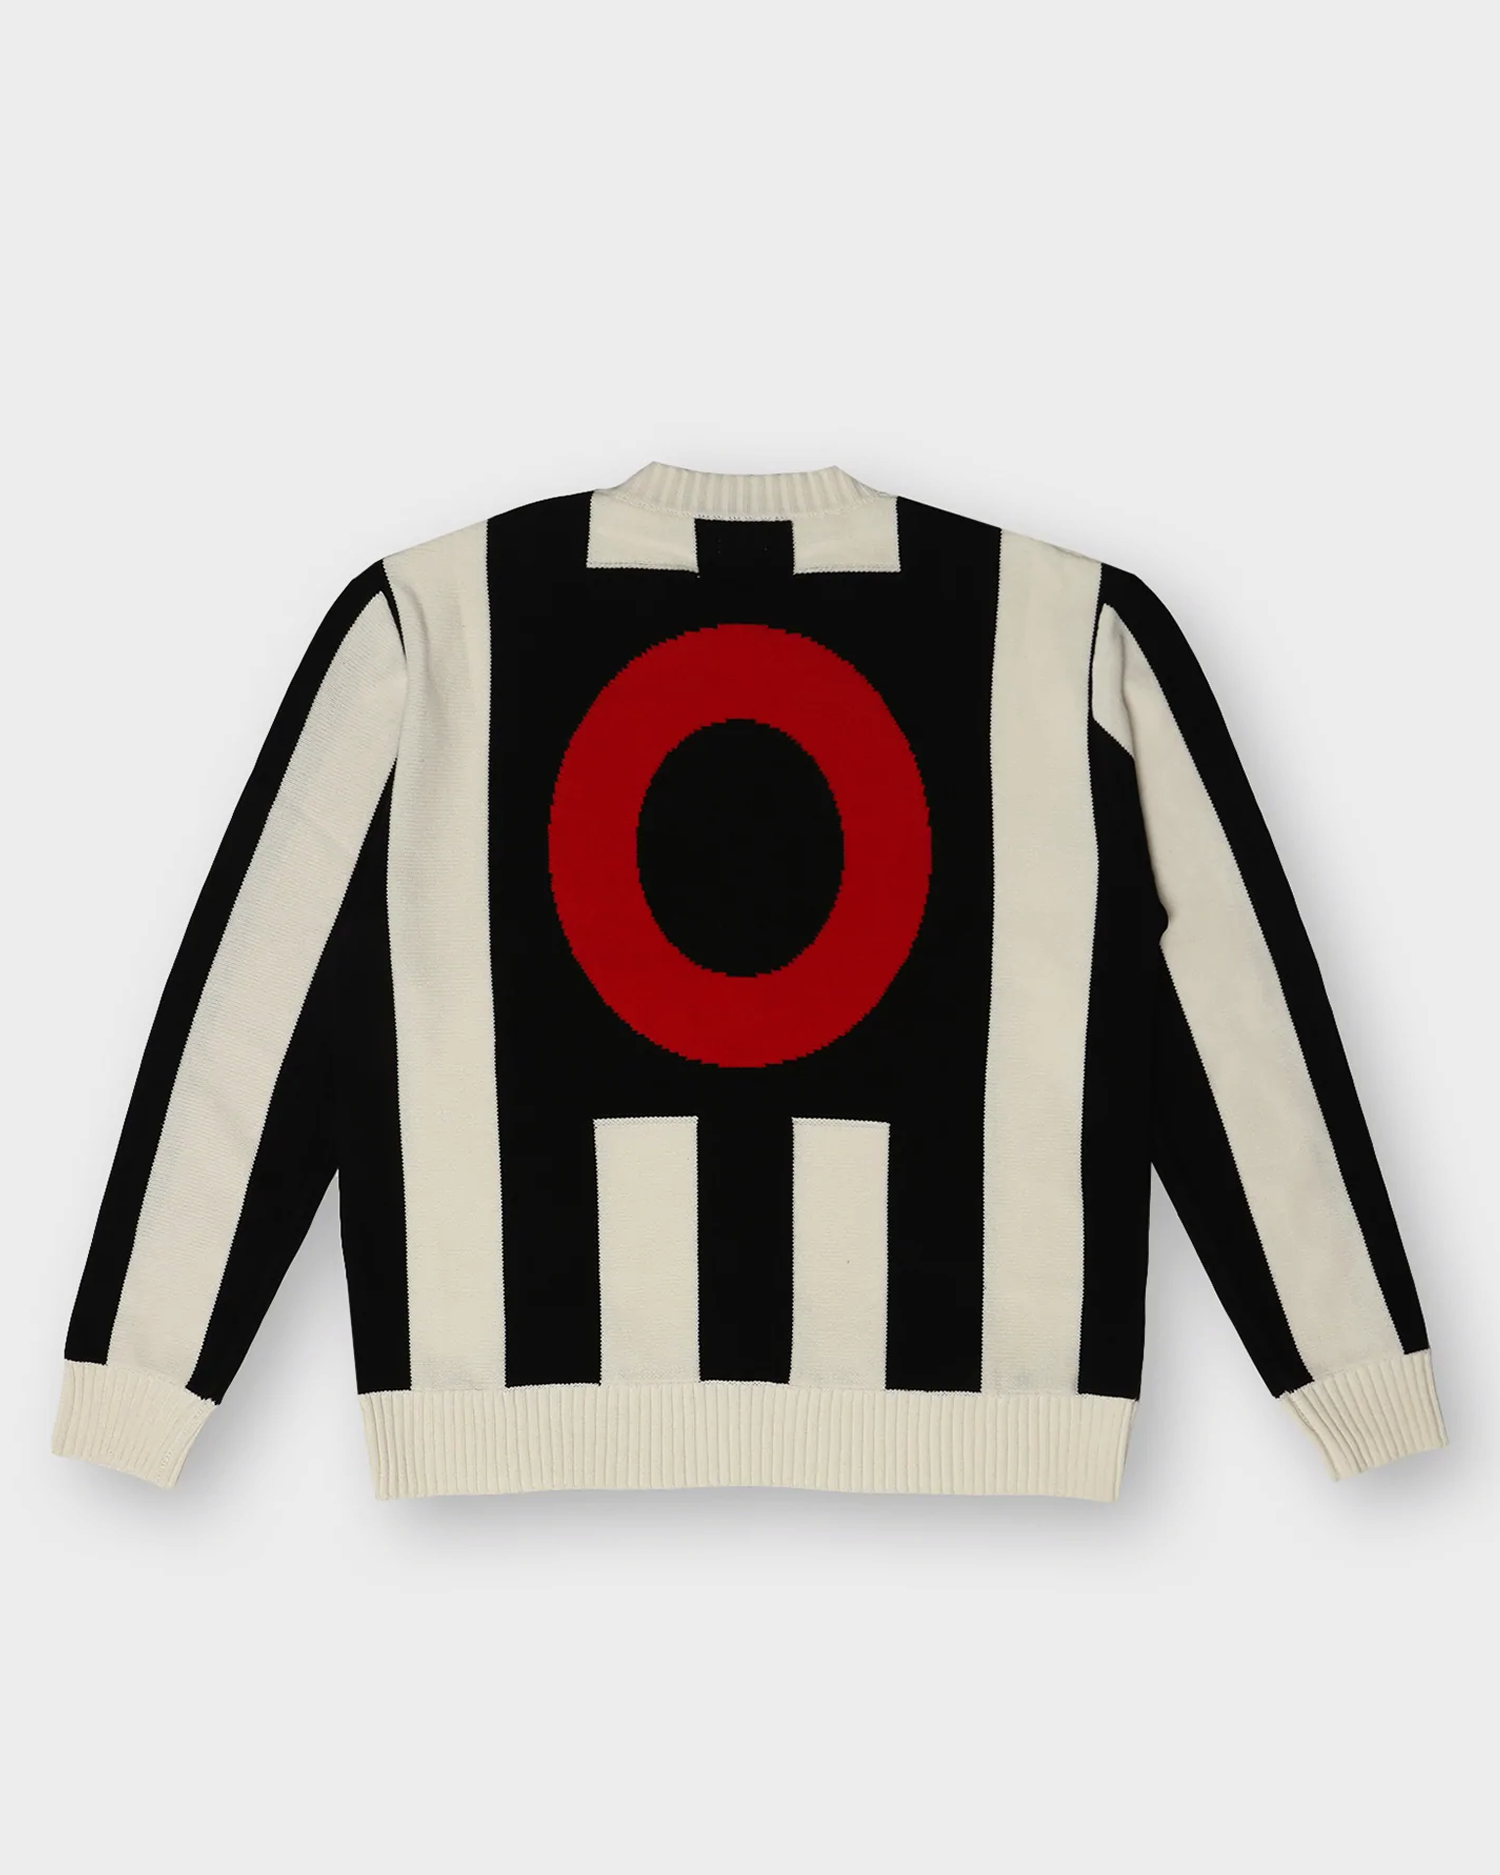 Lack Of Guidance Fabio Knit Sweater Black/Off White